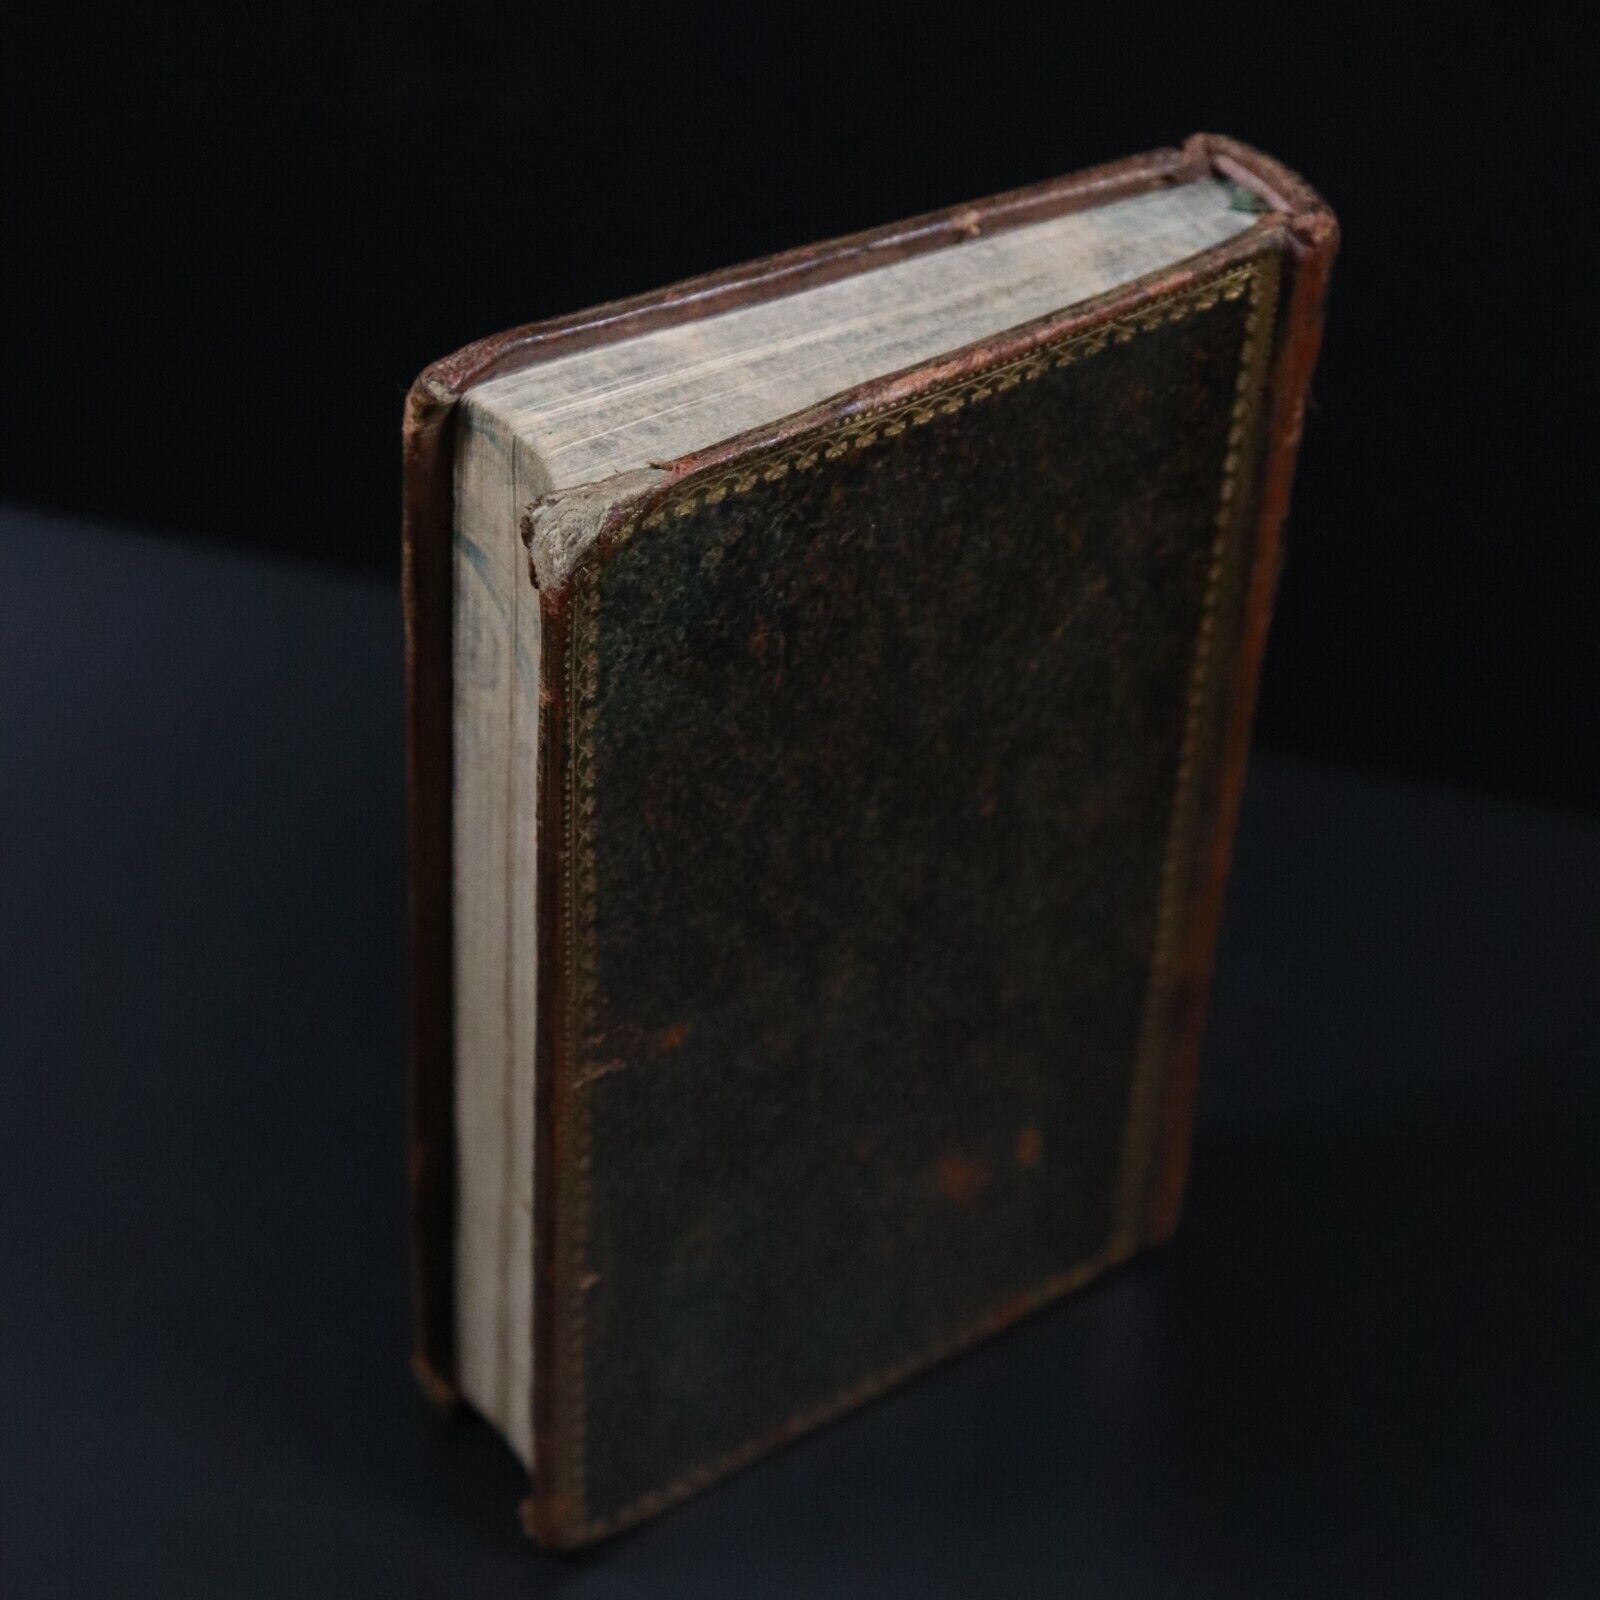 1822 Bibliotheque D'Arthur ou Petites Nouvelle Antiquarian French Childrens Book